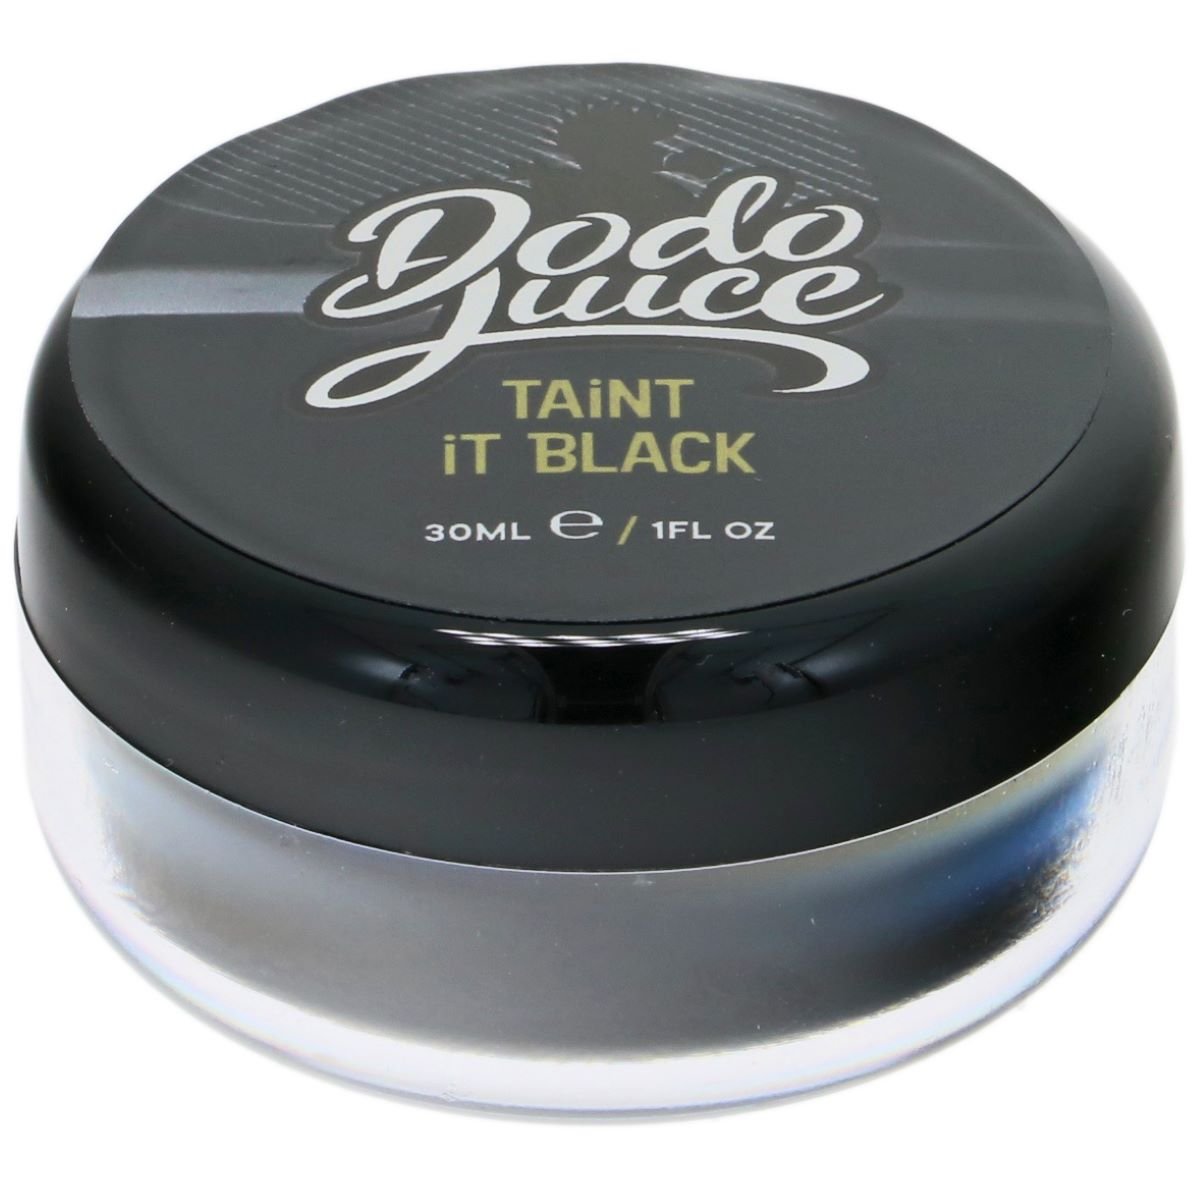 Taint it Black Colour Restoring Wax for faded Dark Trim - 30ml